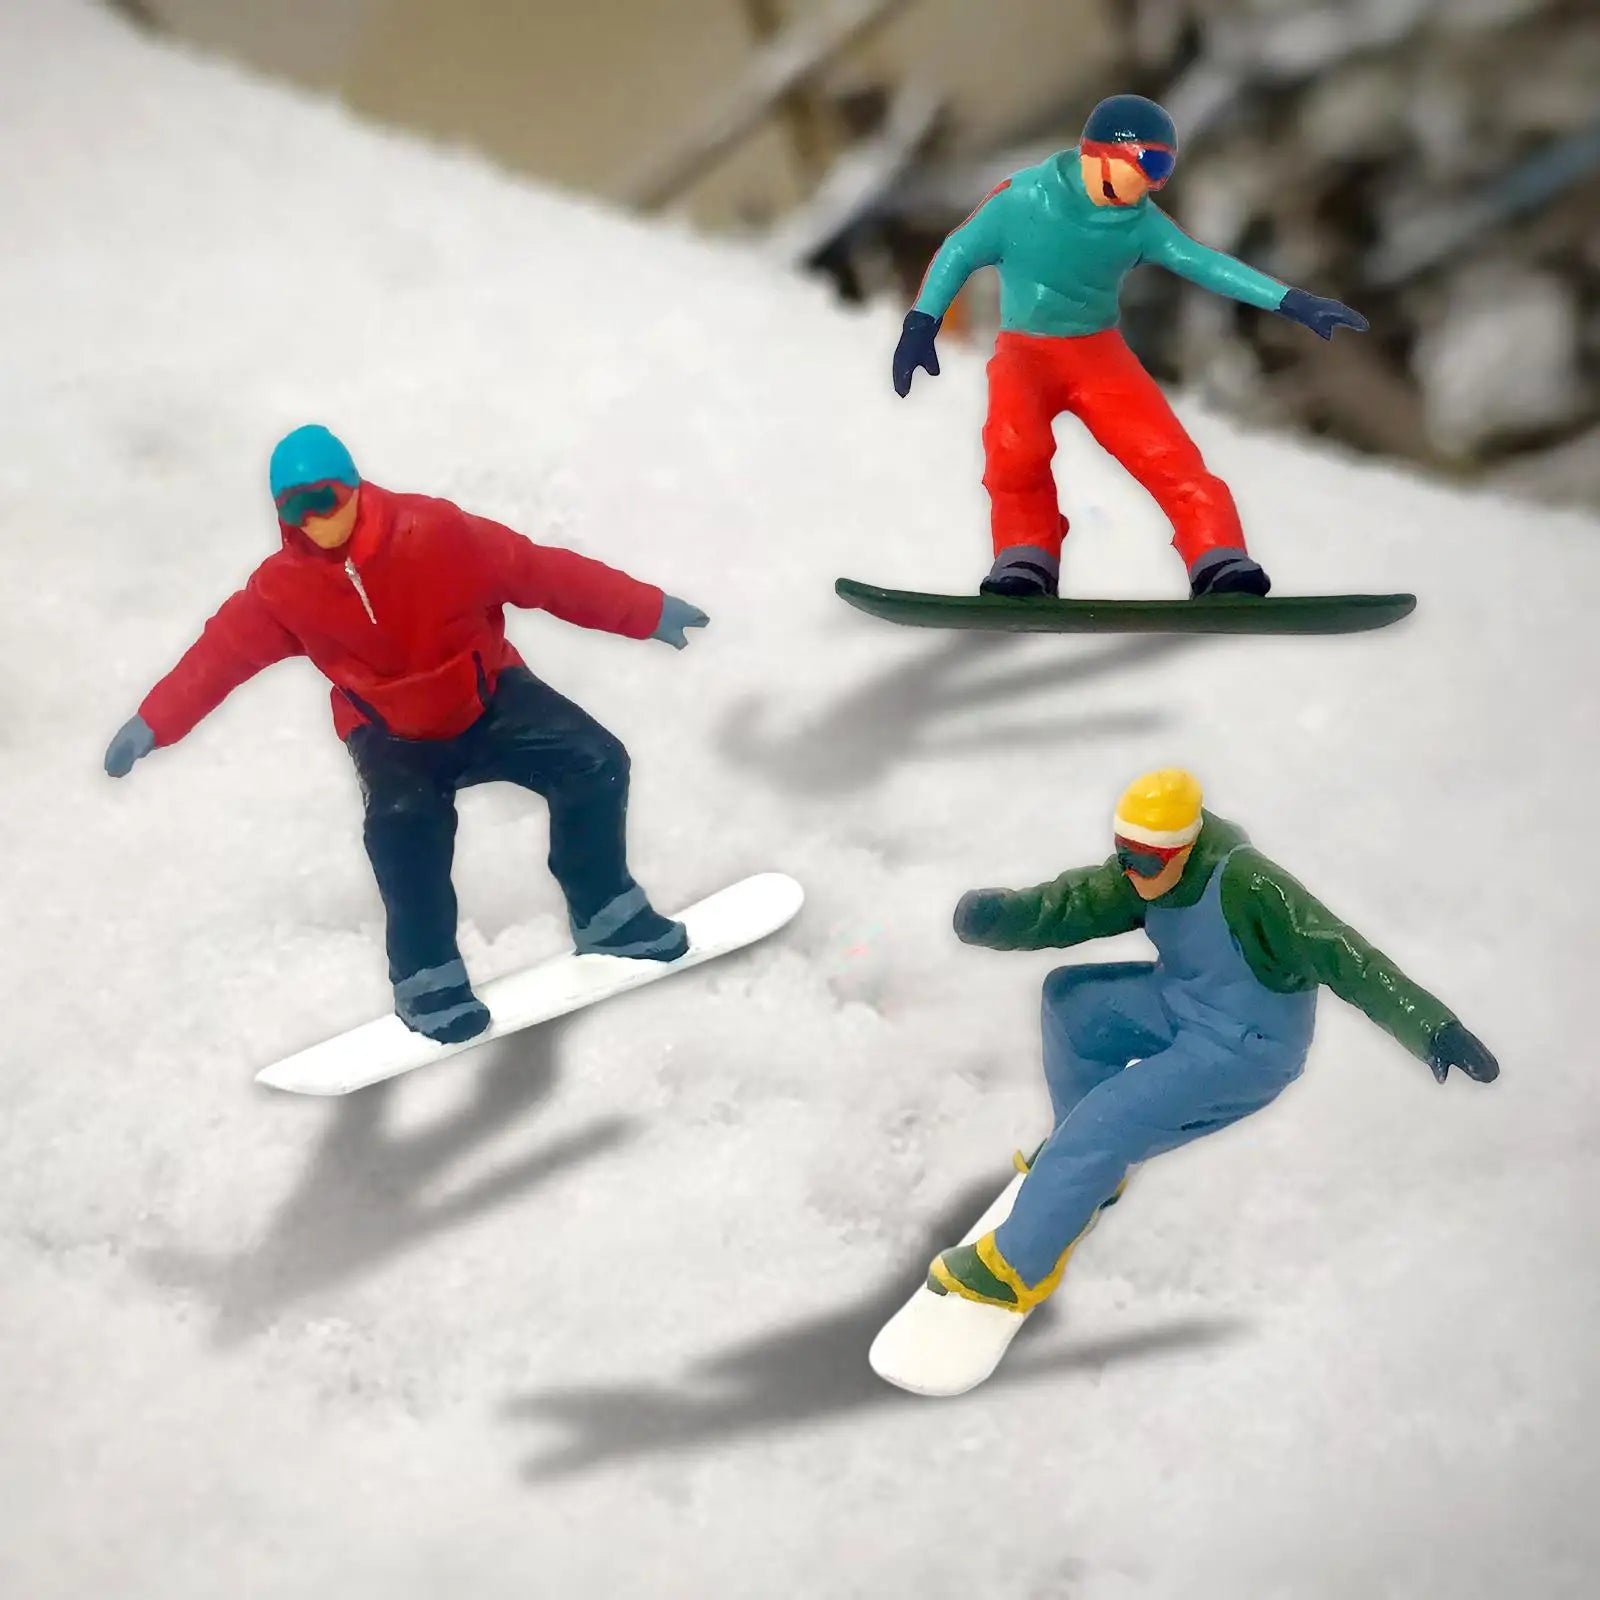 3x Resin HO /87 Mini Skiing Figure Scenes Table Scene Decoration